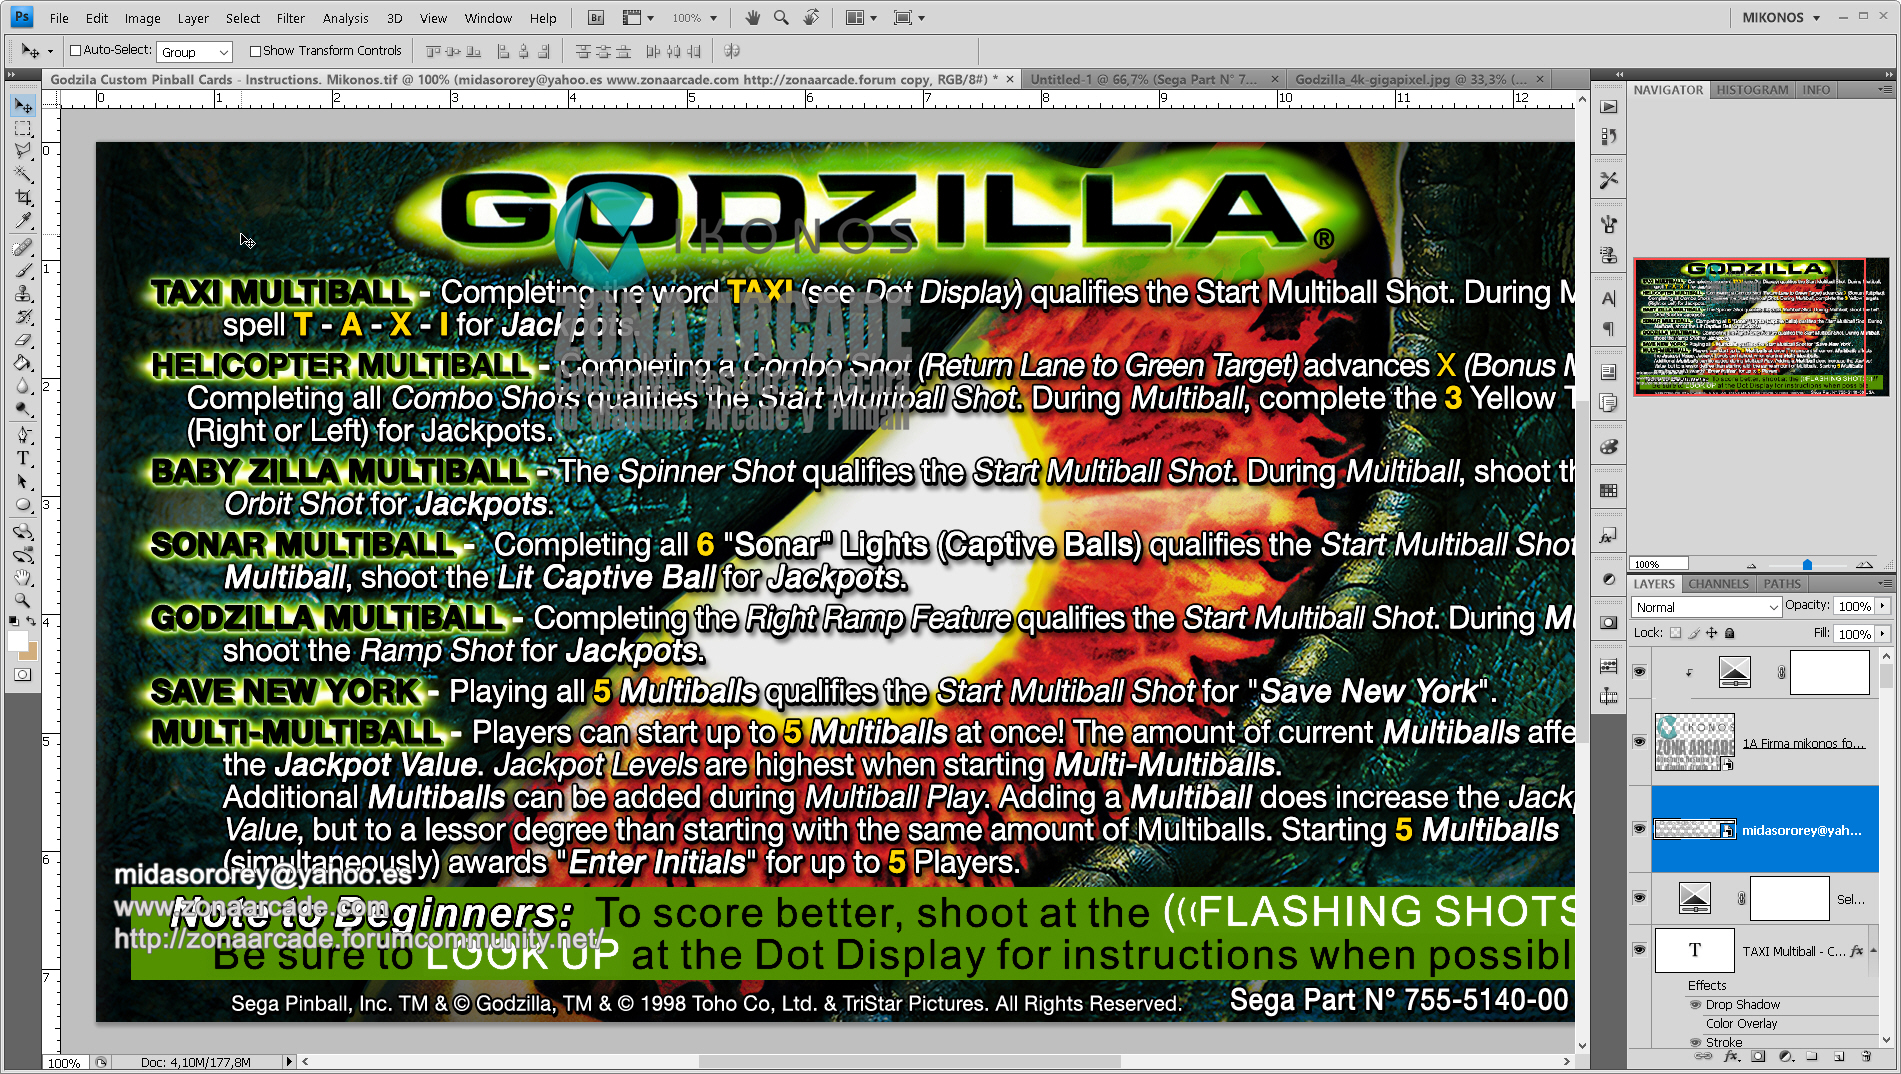 Godzilla Custom Pinball Card - Rules. Mikonos2